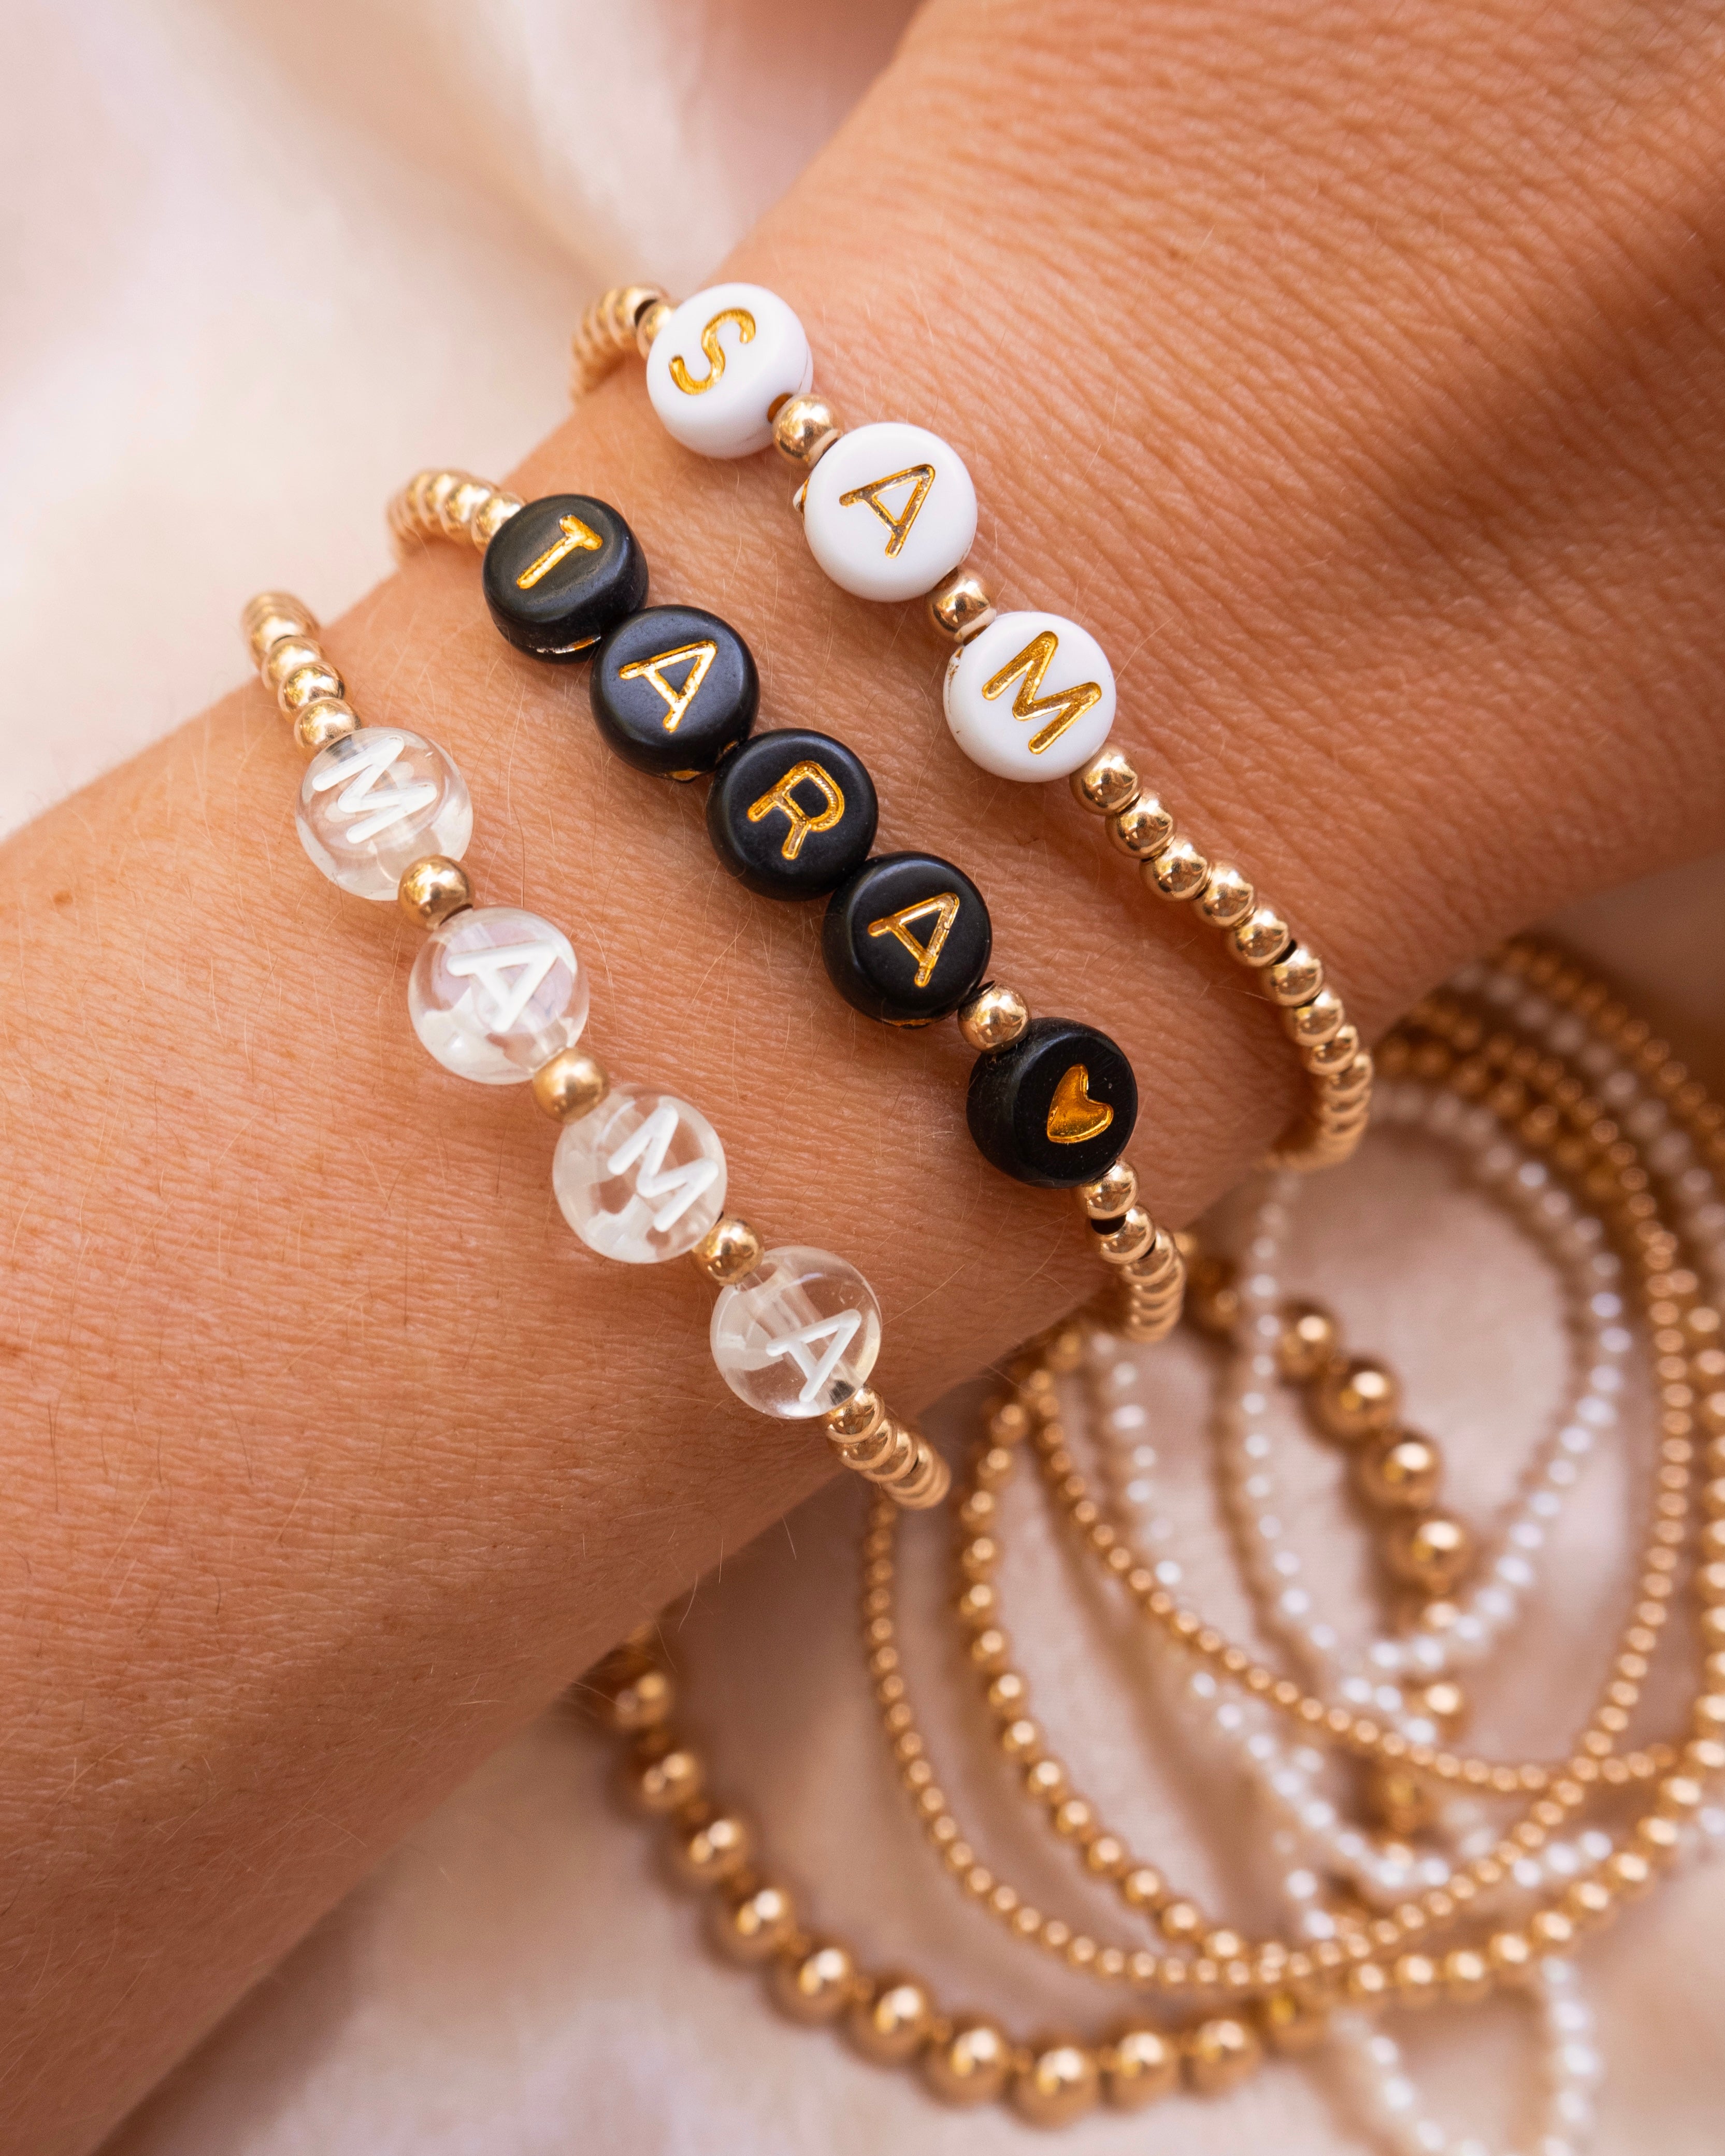 Bracelet With Name Design | Name Bracelet | Pin it Up online gifts